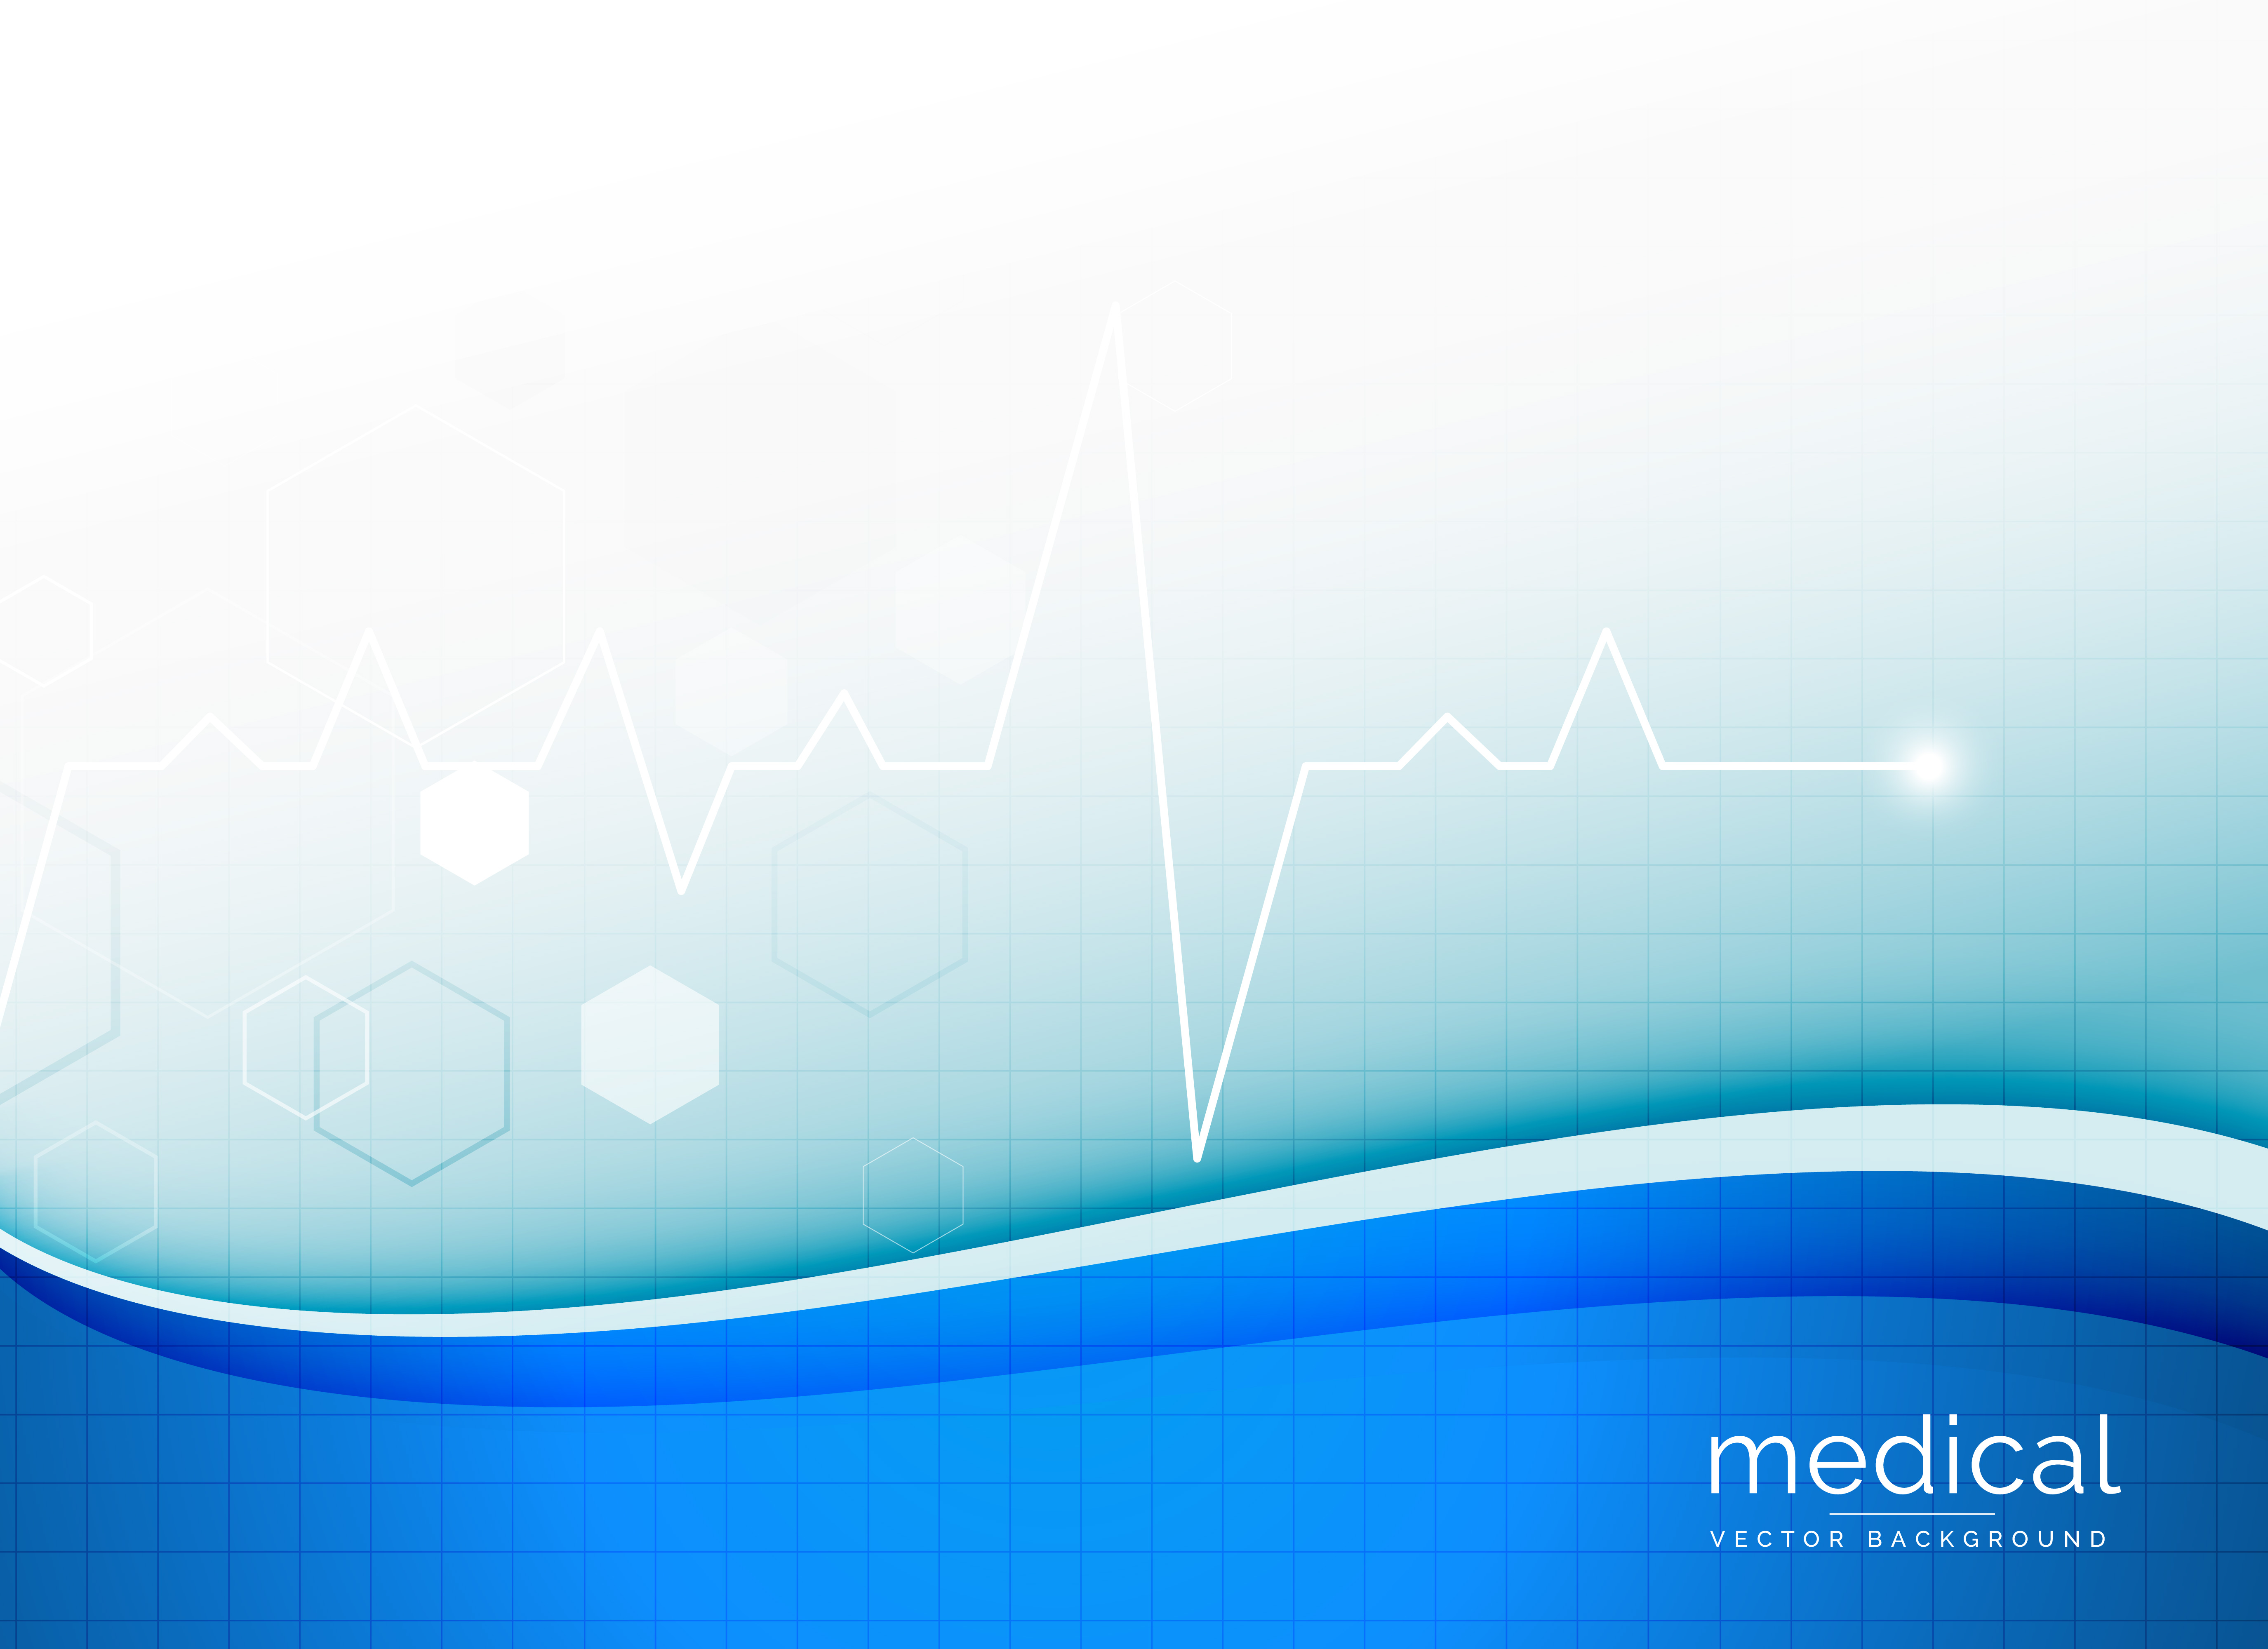 medical-background-for-pharmacy-or-healthcare-vector.jpg